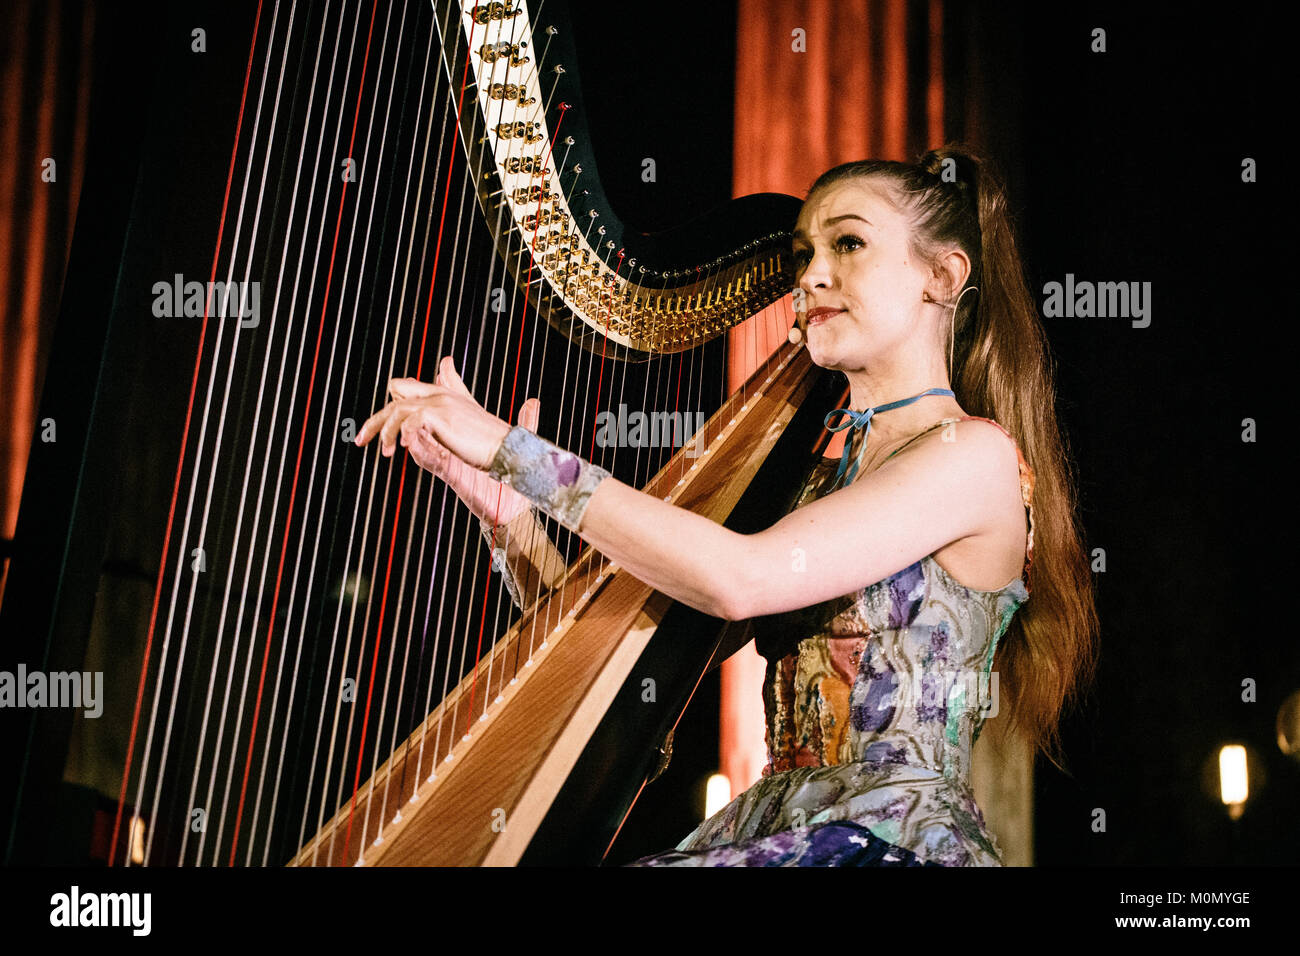 The American singer, songwriter and harpist Joanna Newsom performs a live concert at the New Carlsberg Glyptotek in Copenhagen as part of the Danish music festival Frost Festival 2016. Denmark, 26/02 2016. Stock Photo